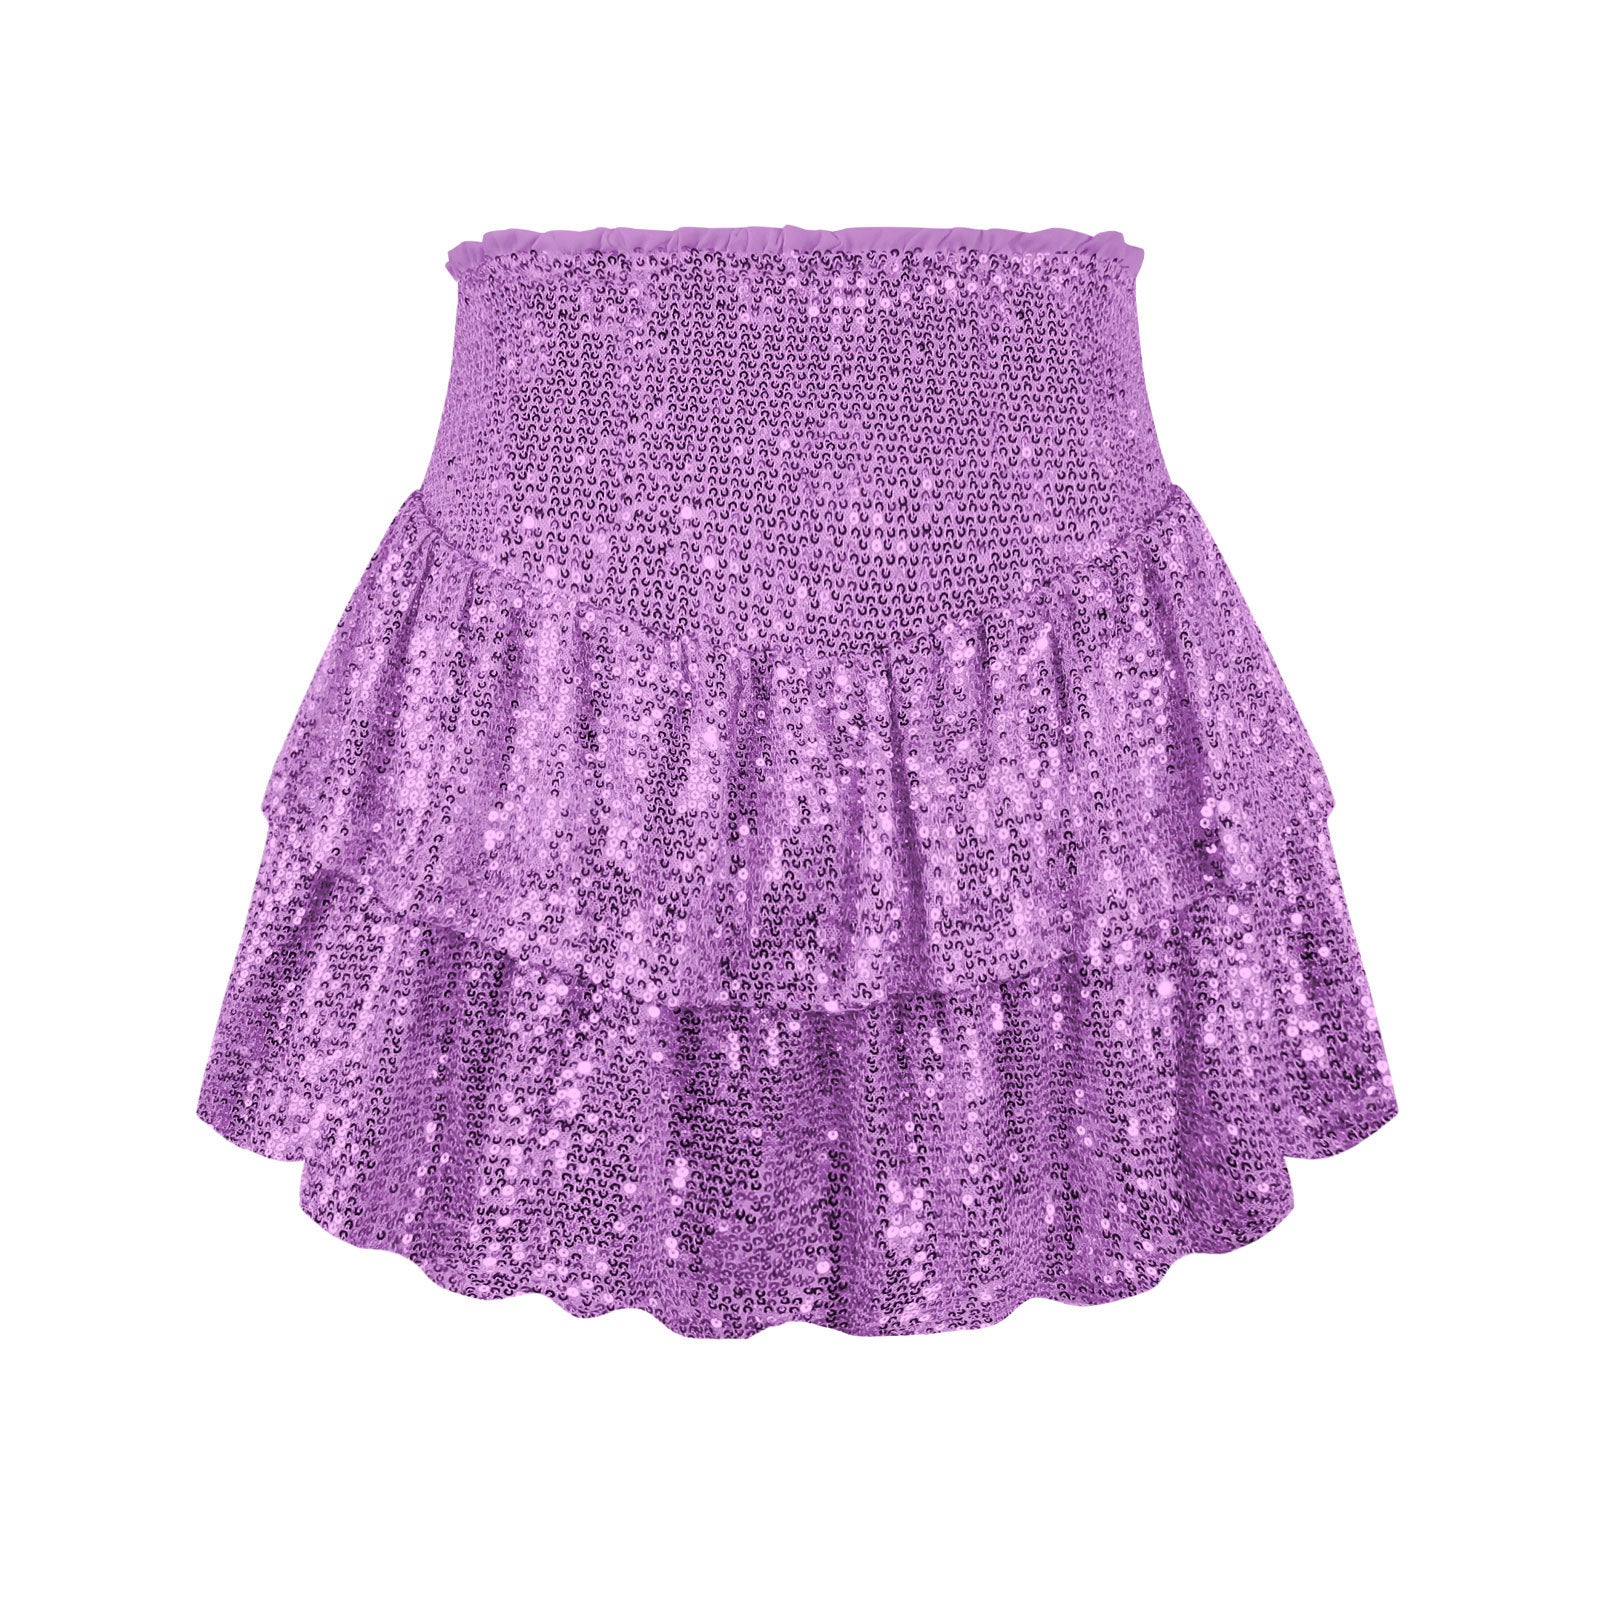 Women's Ruffle Skirt Elastic Waist Sequin Skirt